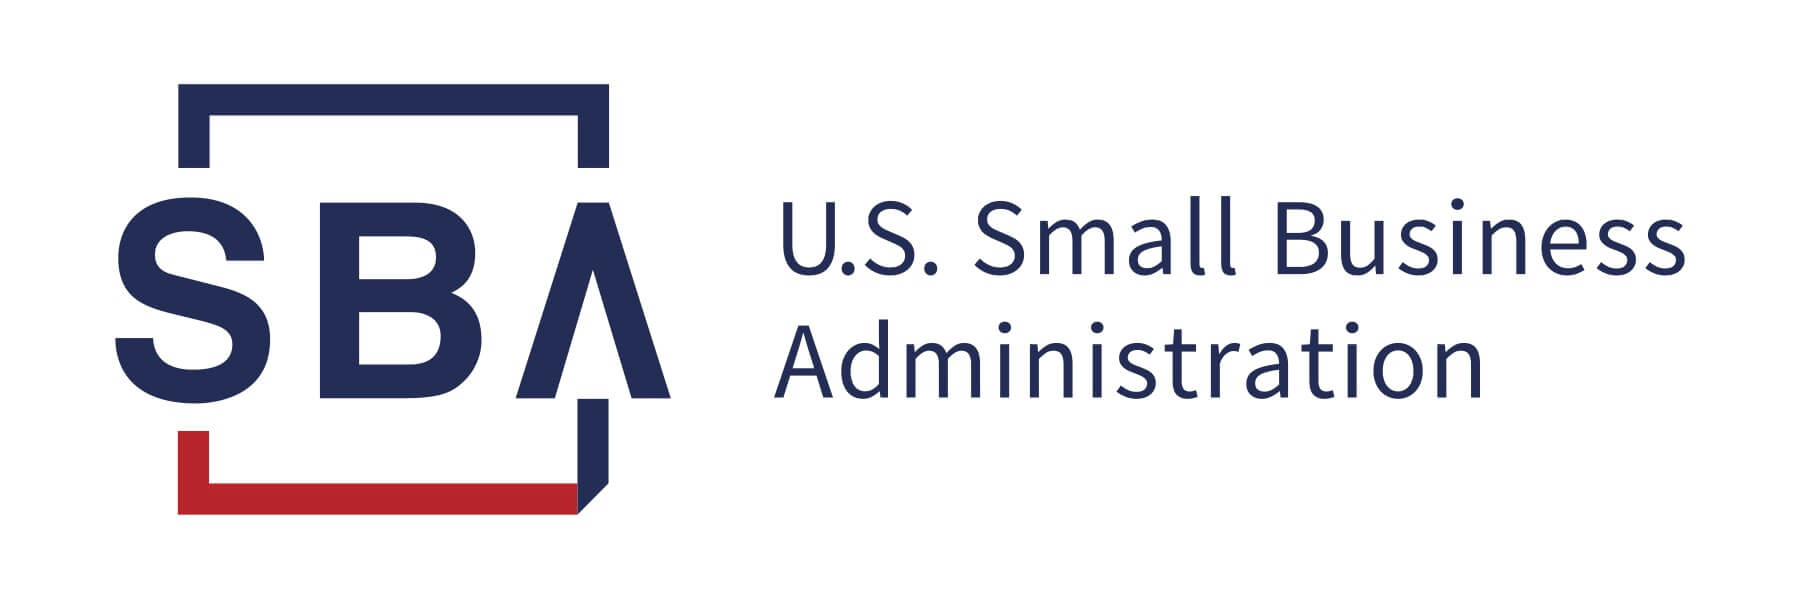 SBA.logo1